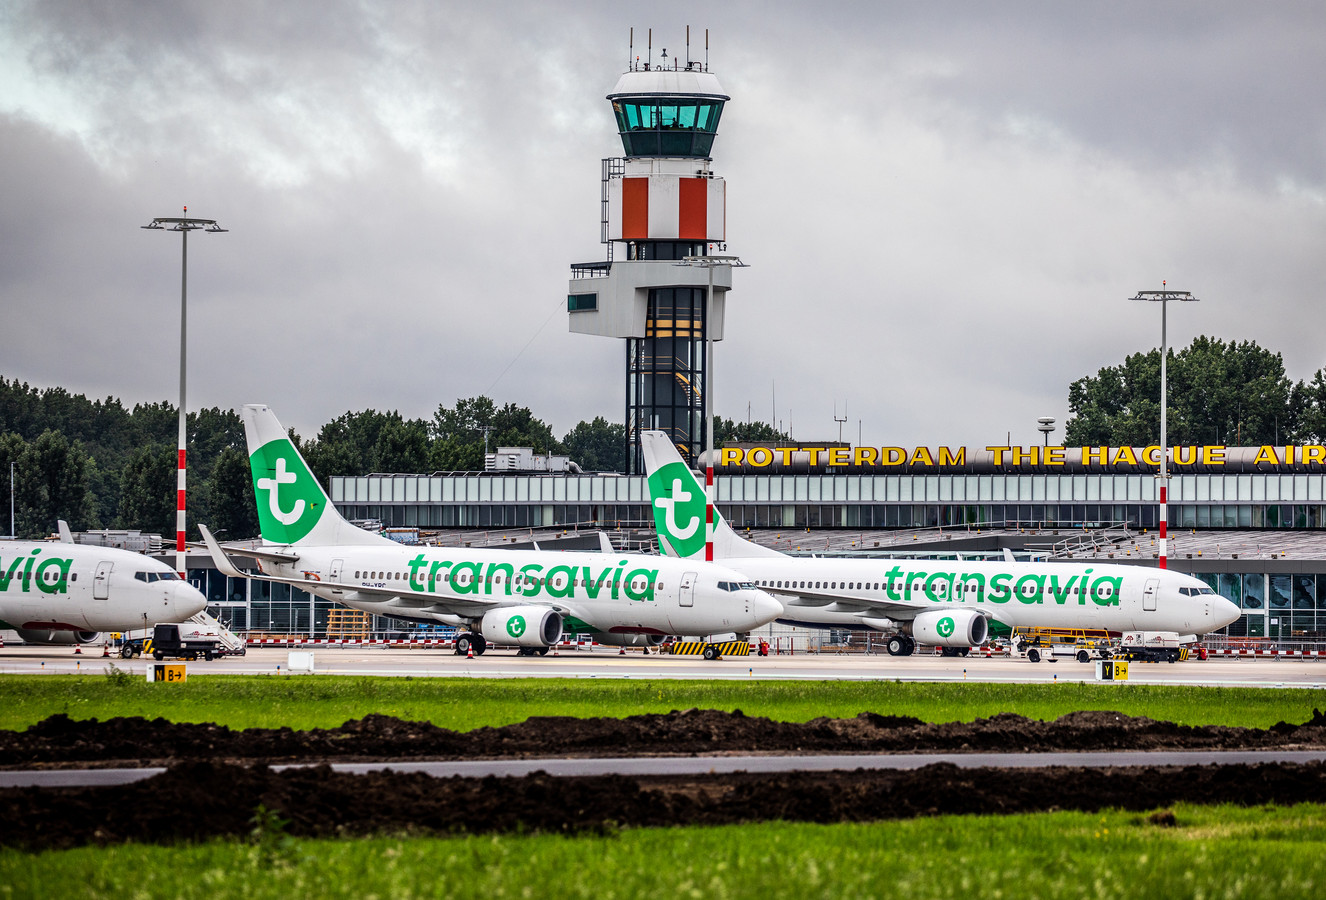 Vlucht van Transavia naar Faro vanaf Rotterdam The Hague Airport.